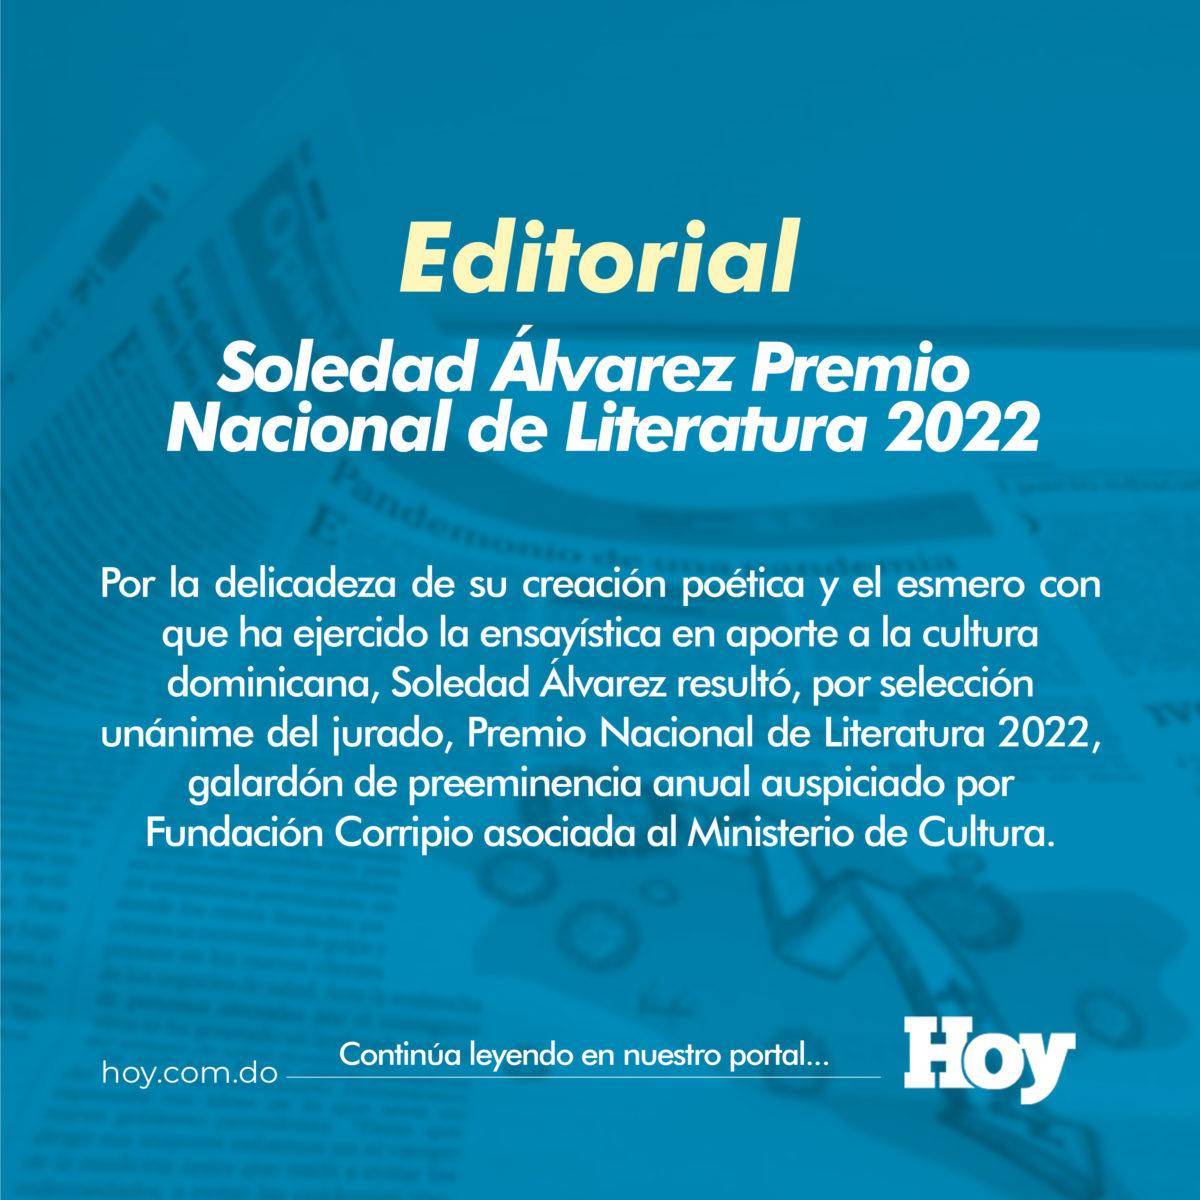 Soledad Álvarez Premio Nacional de Literatura 2022